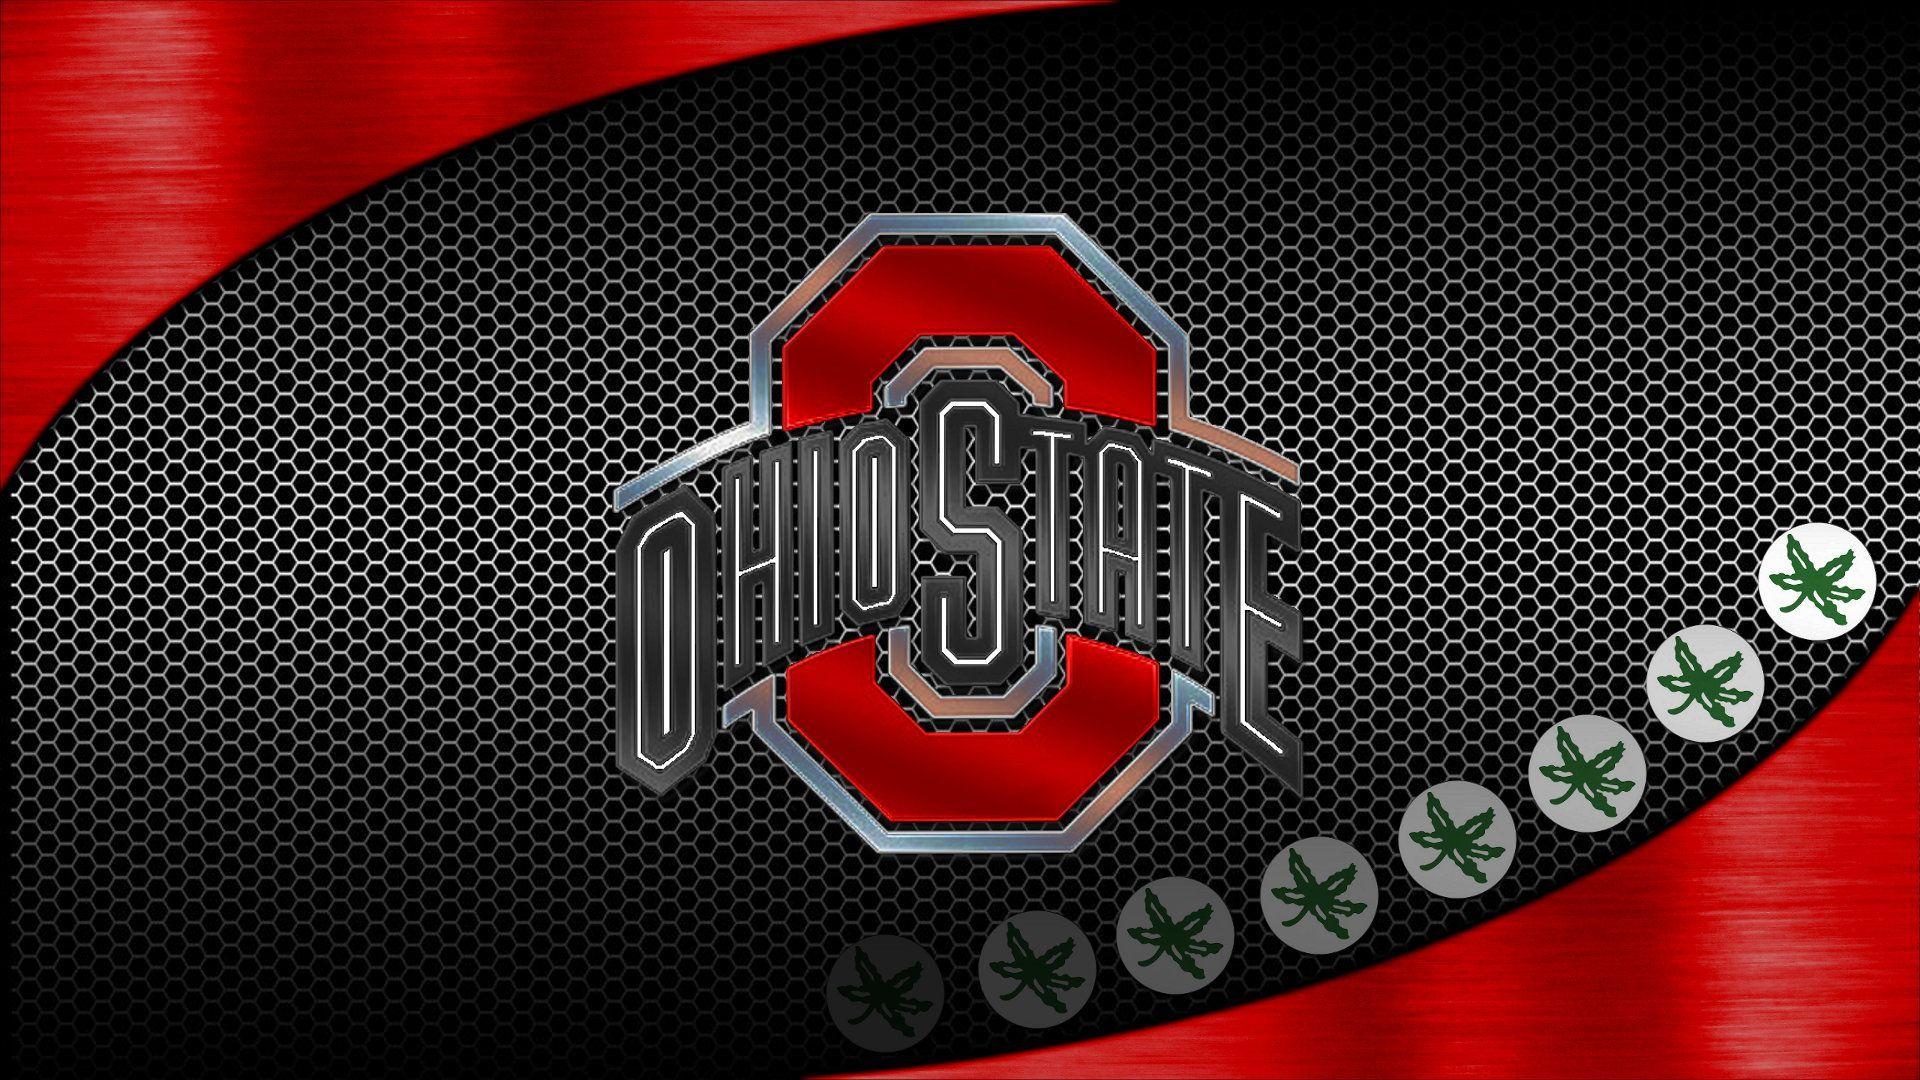 OSU Wallpaper 532. Ohio State Buckeyes. Ohio